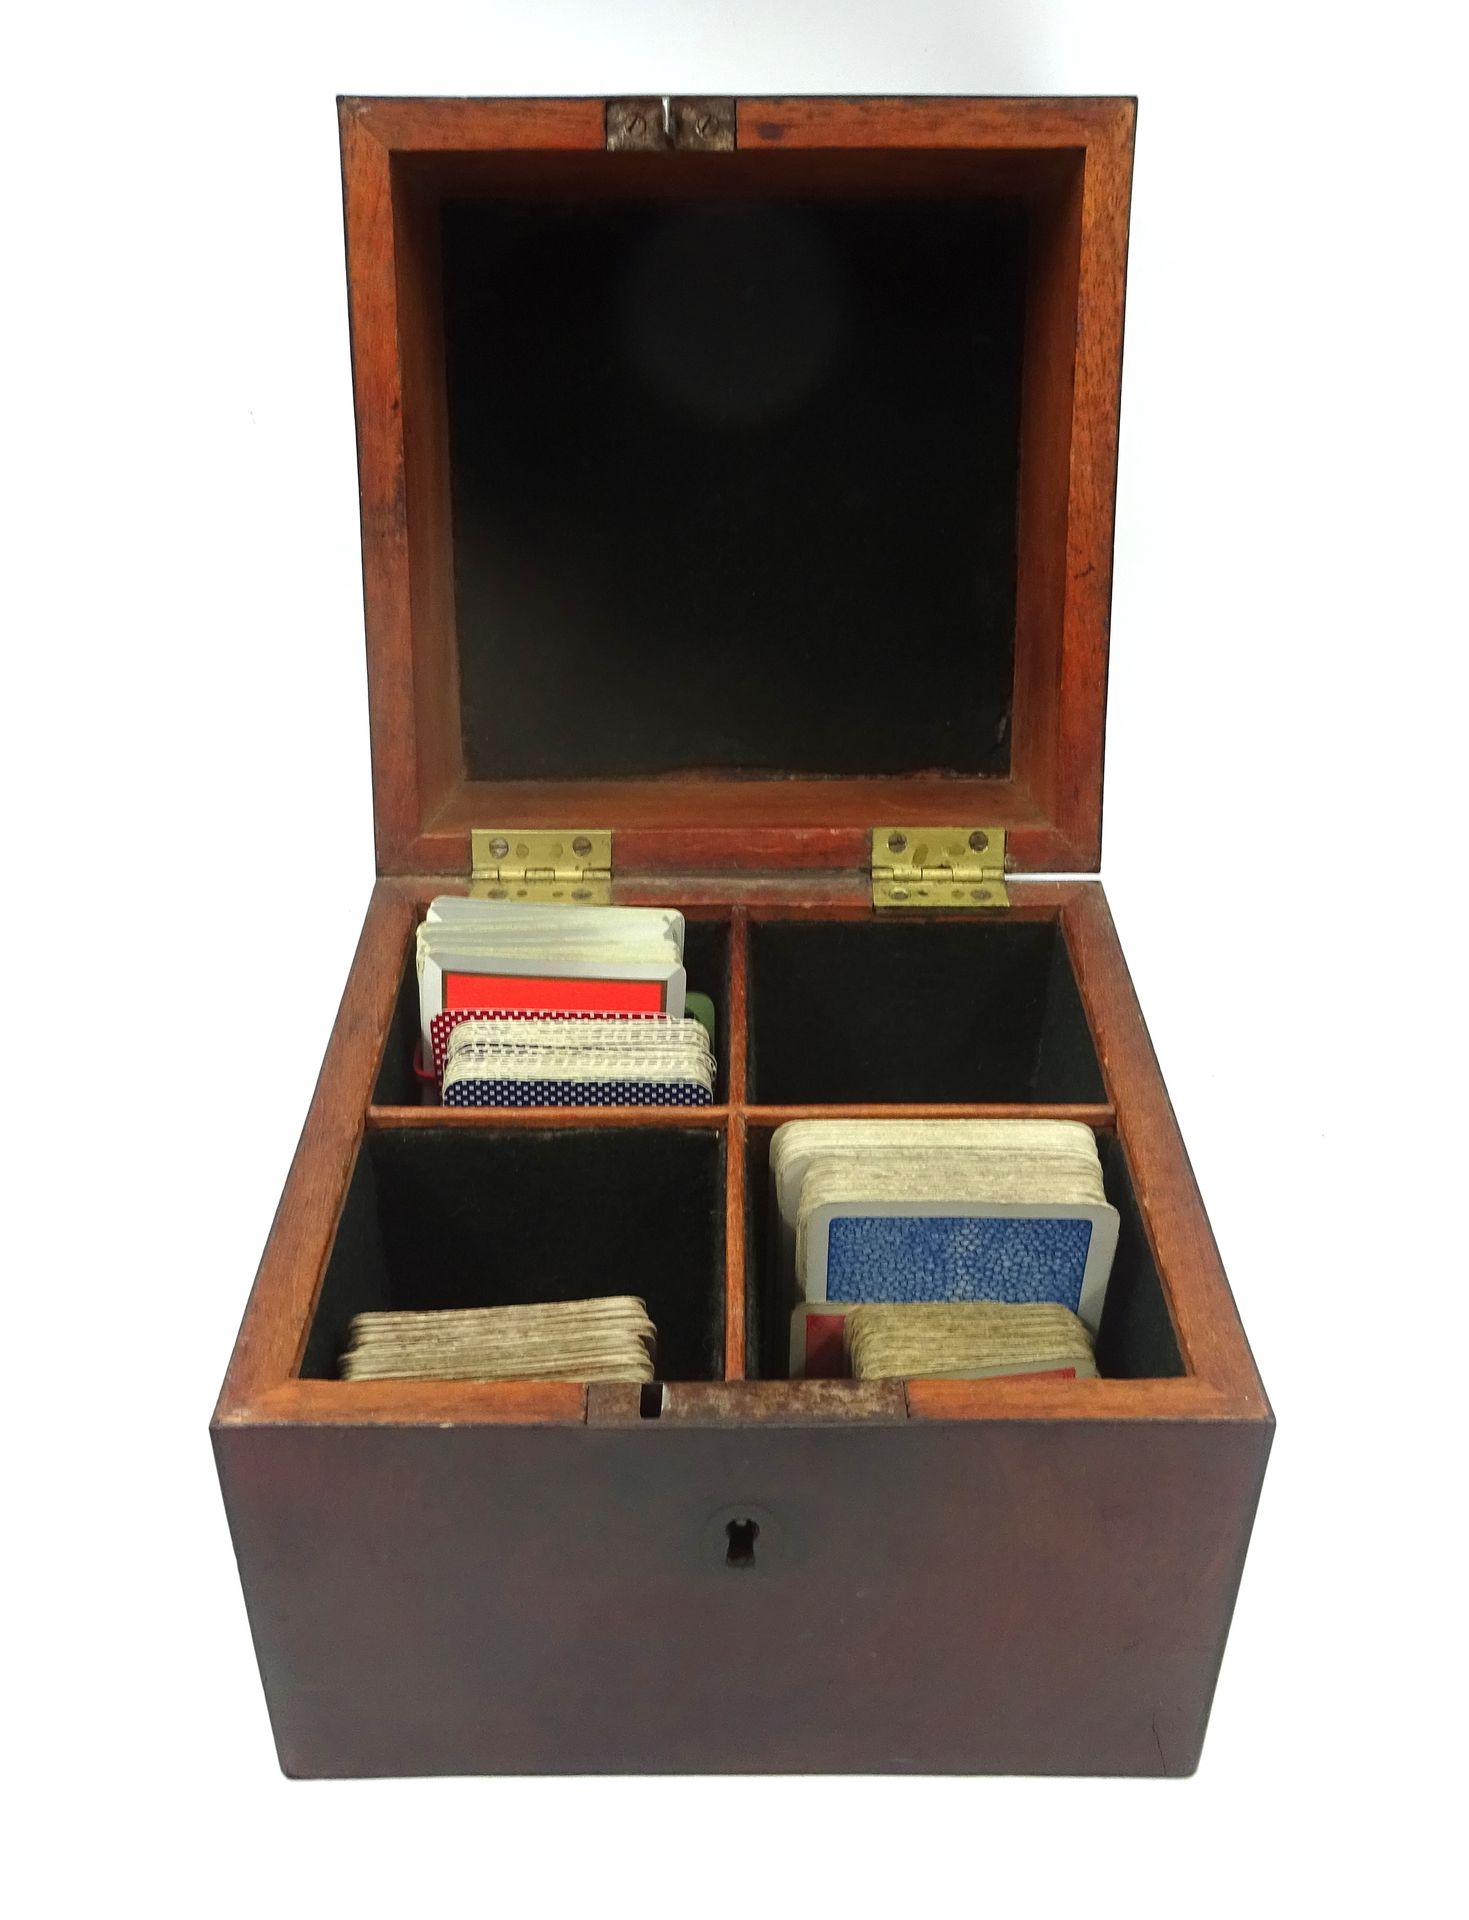 Null 染色胡桃木饰面立方卡盒，有四个隔层。17.5 x 17.5 x 19 厘米。略有磨损，钥匙丢失。